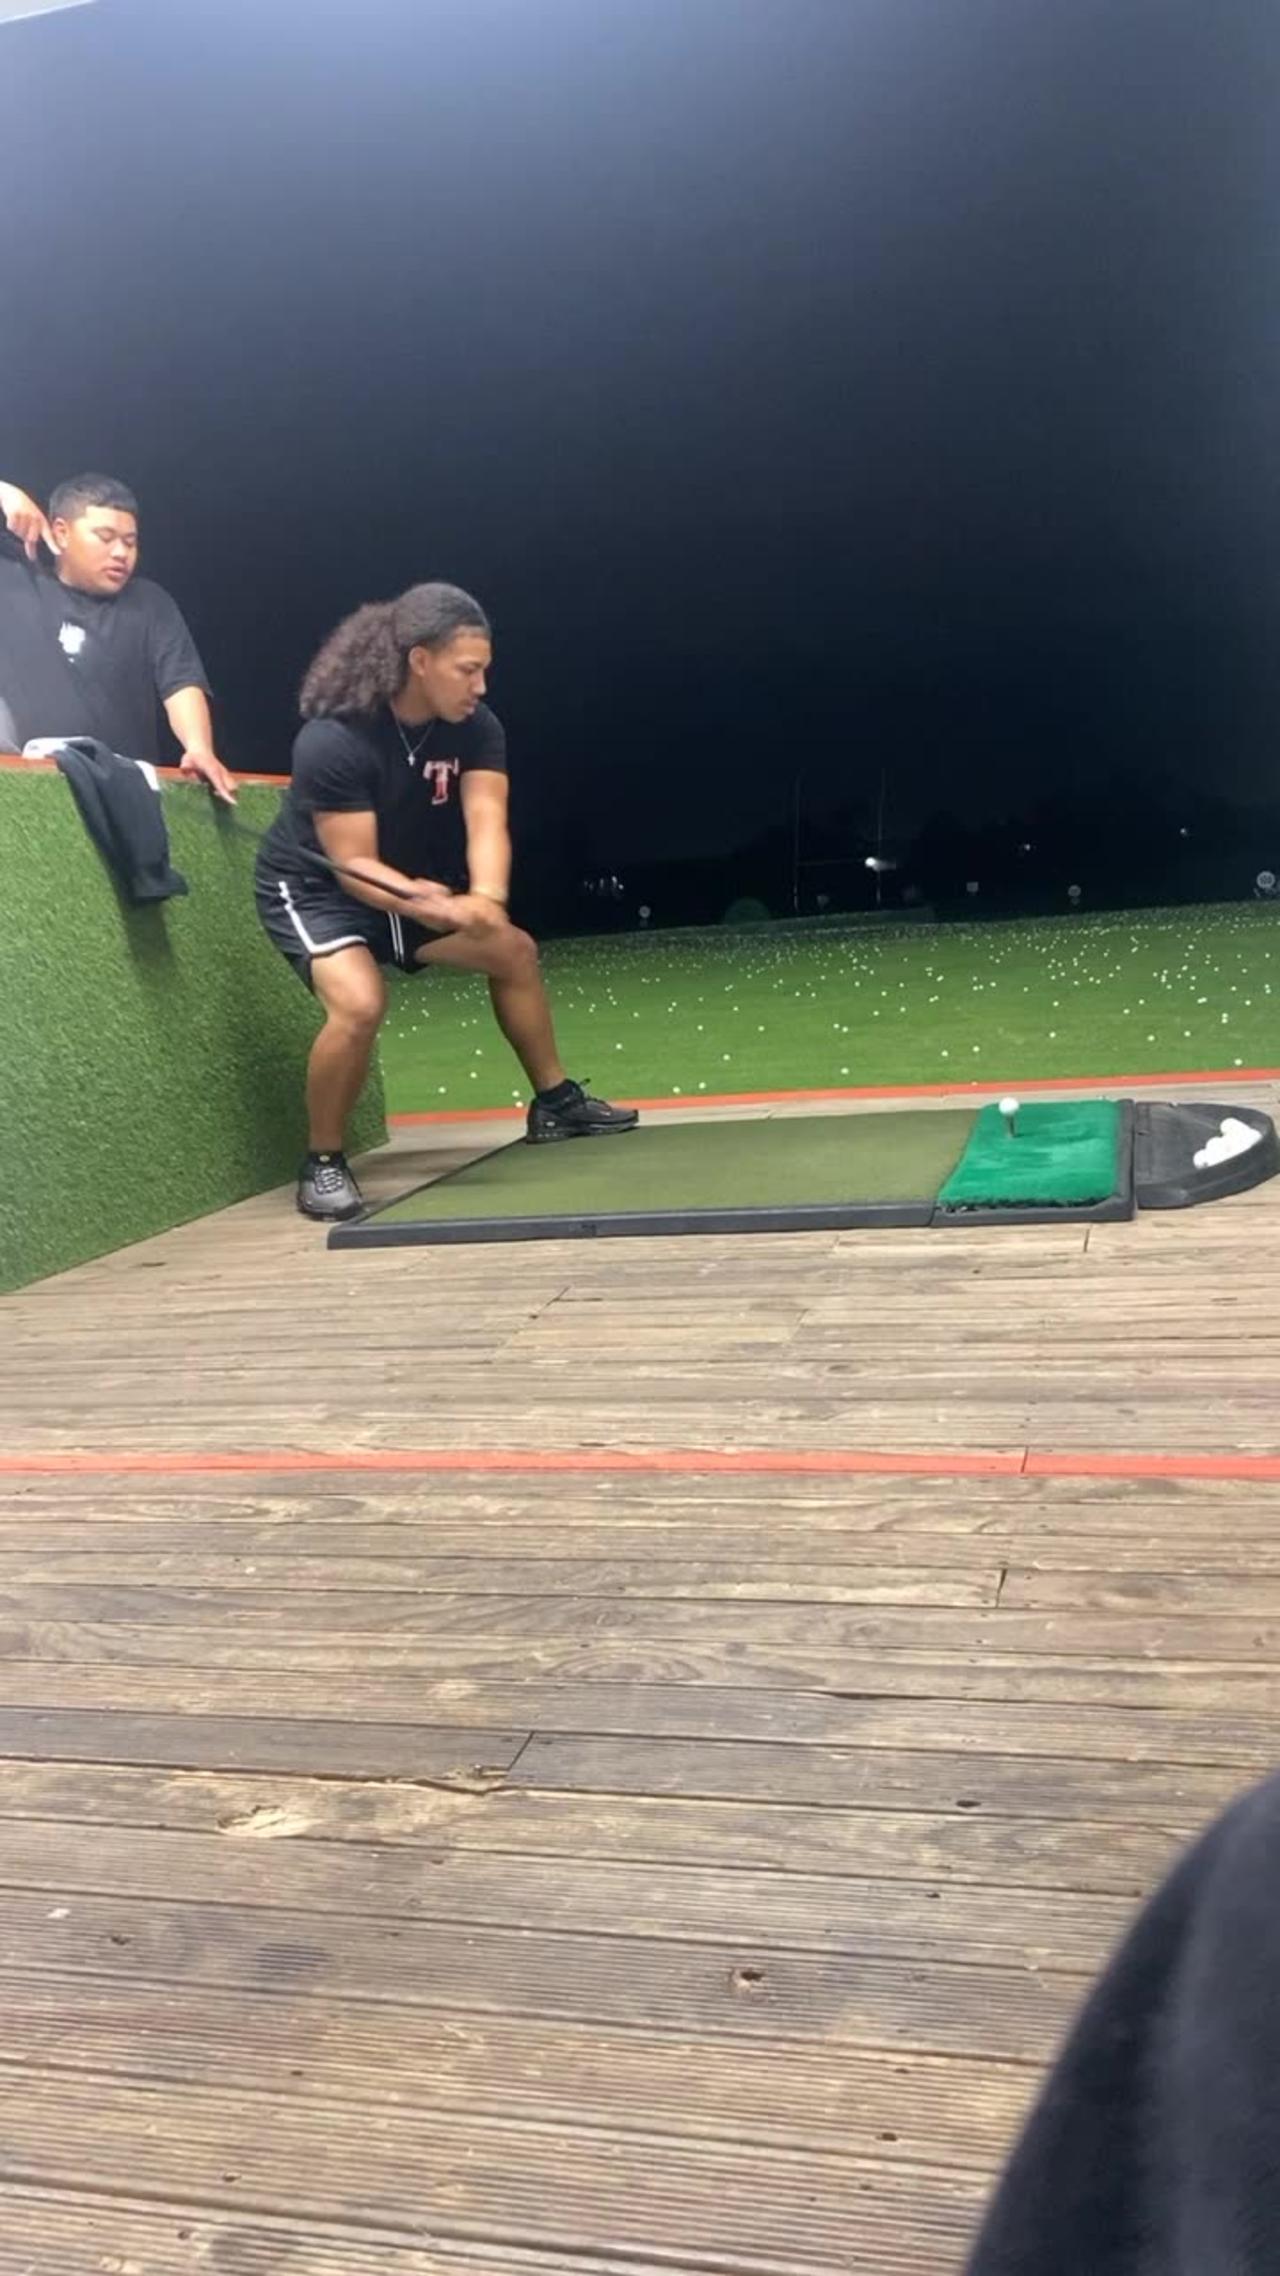 Golfer Hits The Wrong Ball